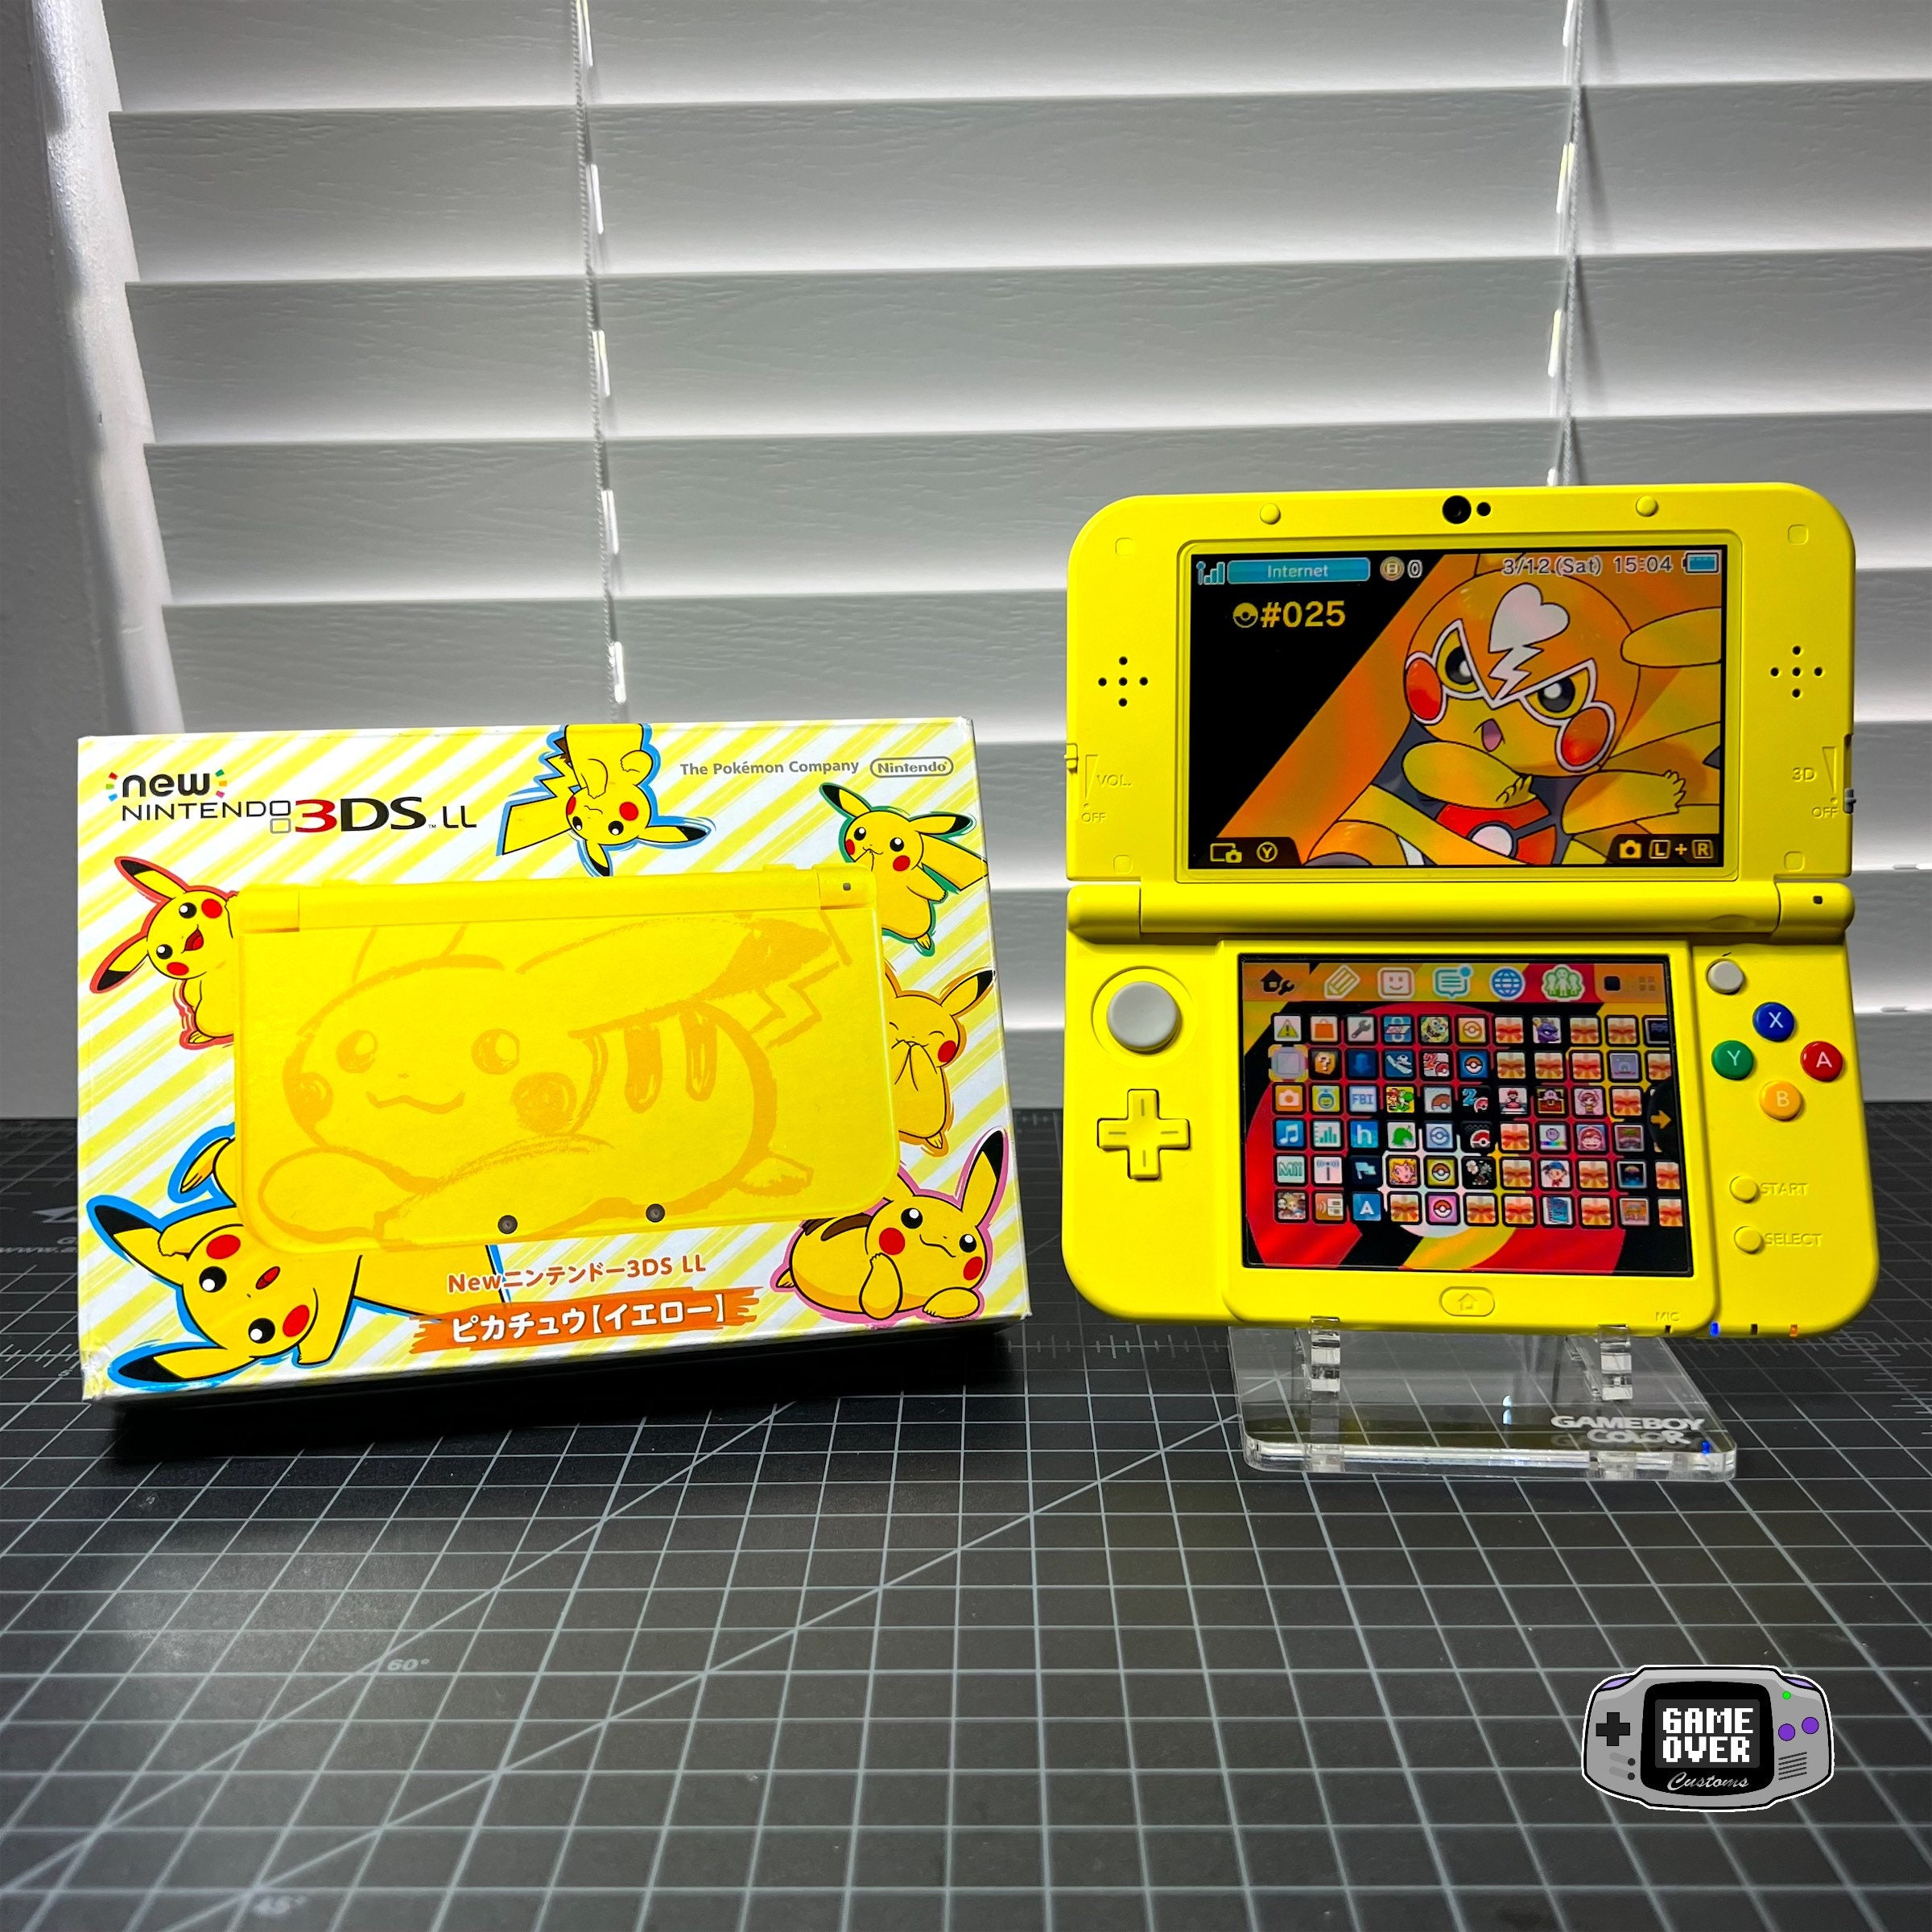 Solgaleo Gaming - New Pokemon GBA ROM HACK With new